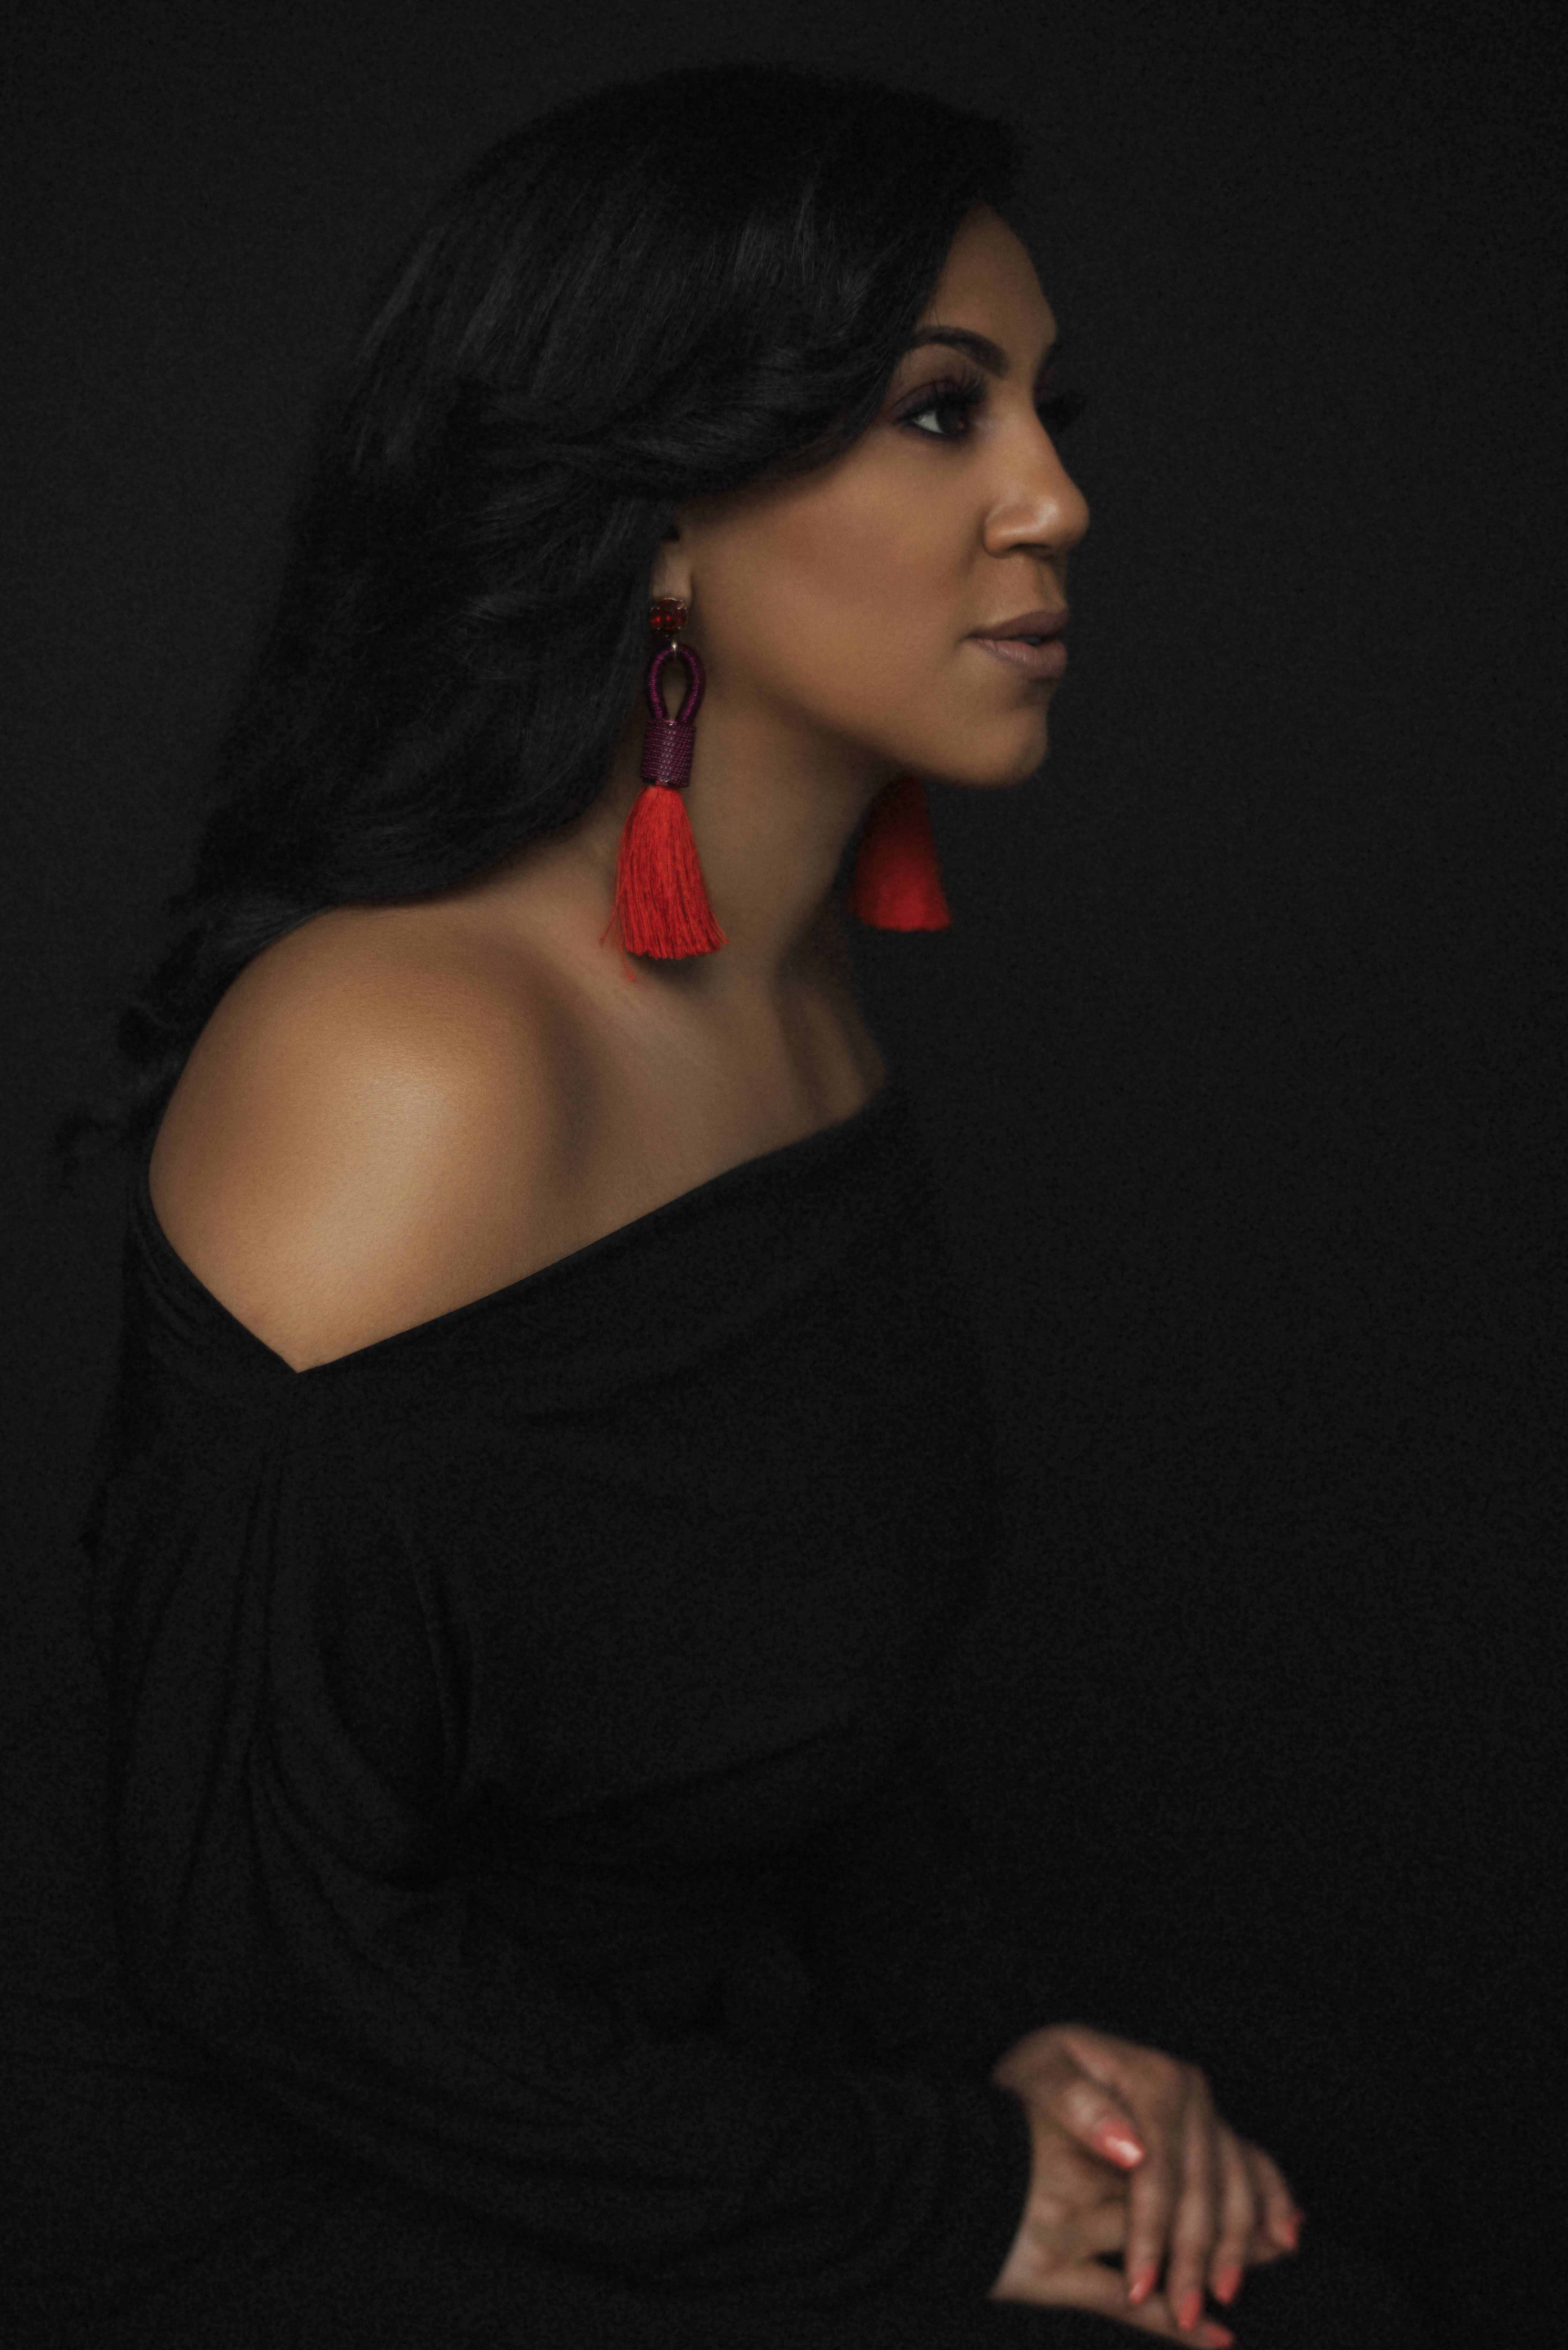 Profile Noire by Rhonisha Franklin